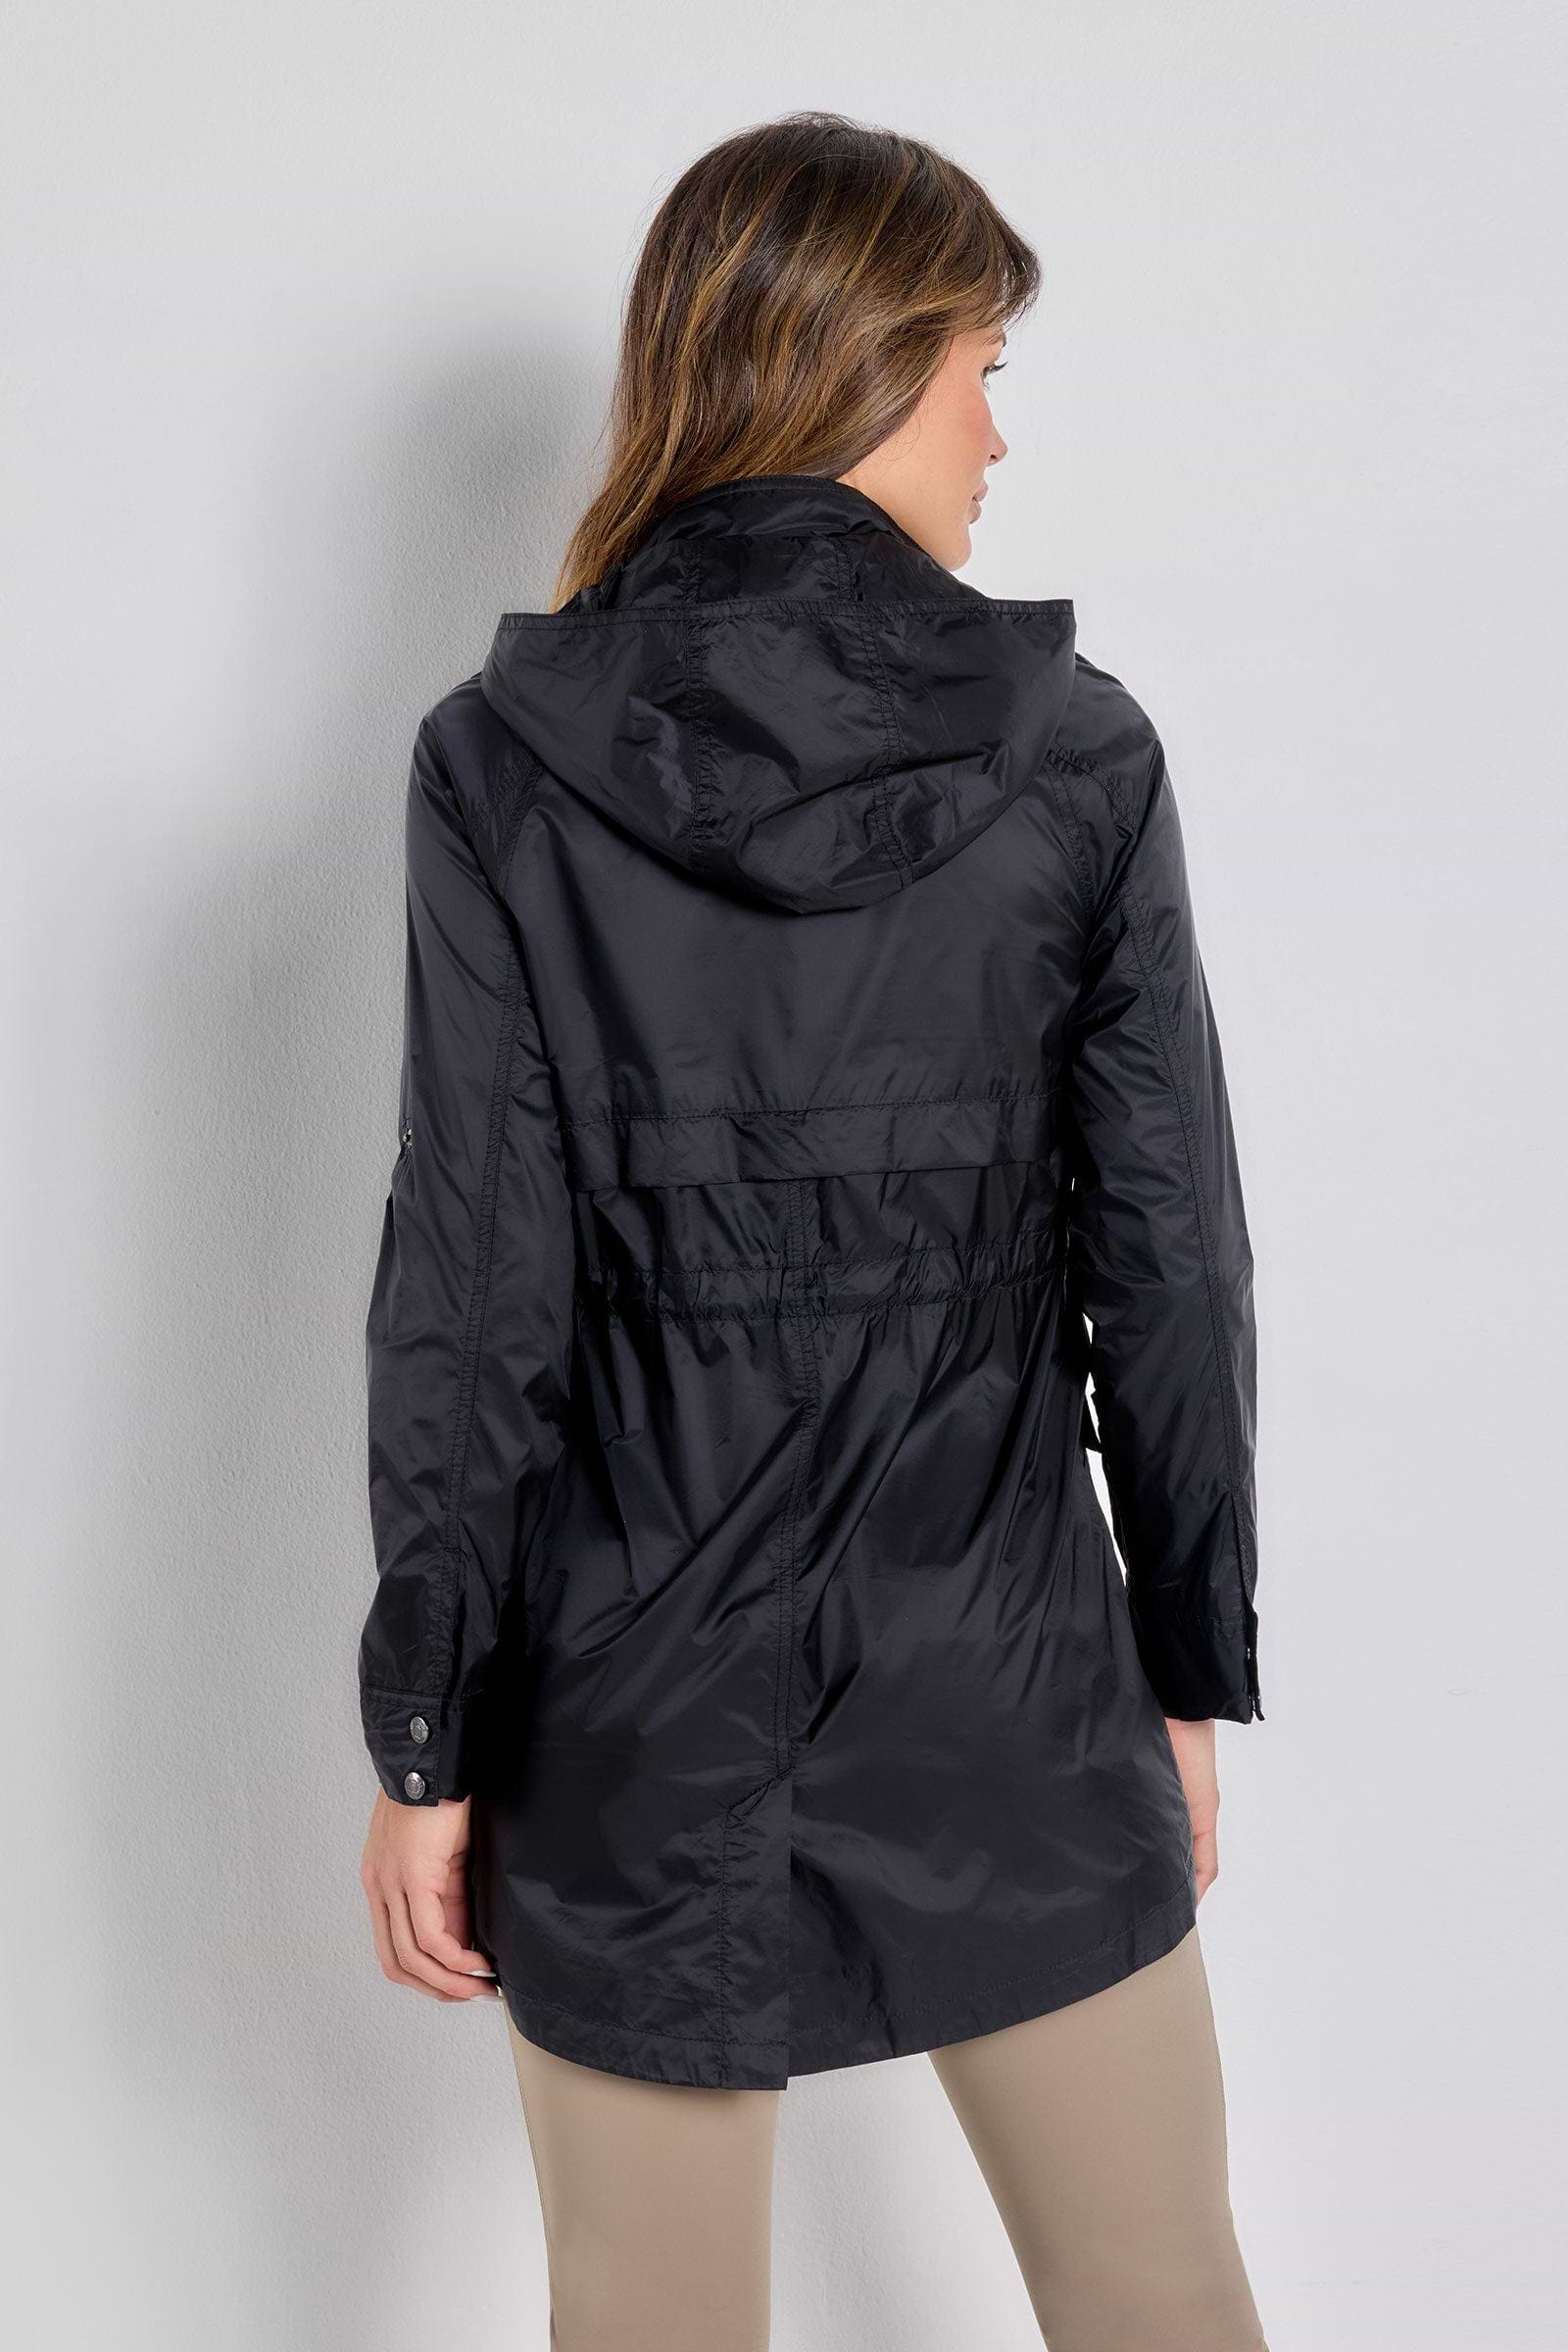 The Best Travel Jacket. Woman Showing the Back Profile of a Ramona Windbreaker Jacket in Black.